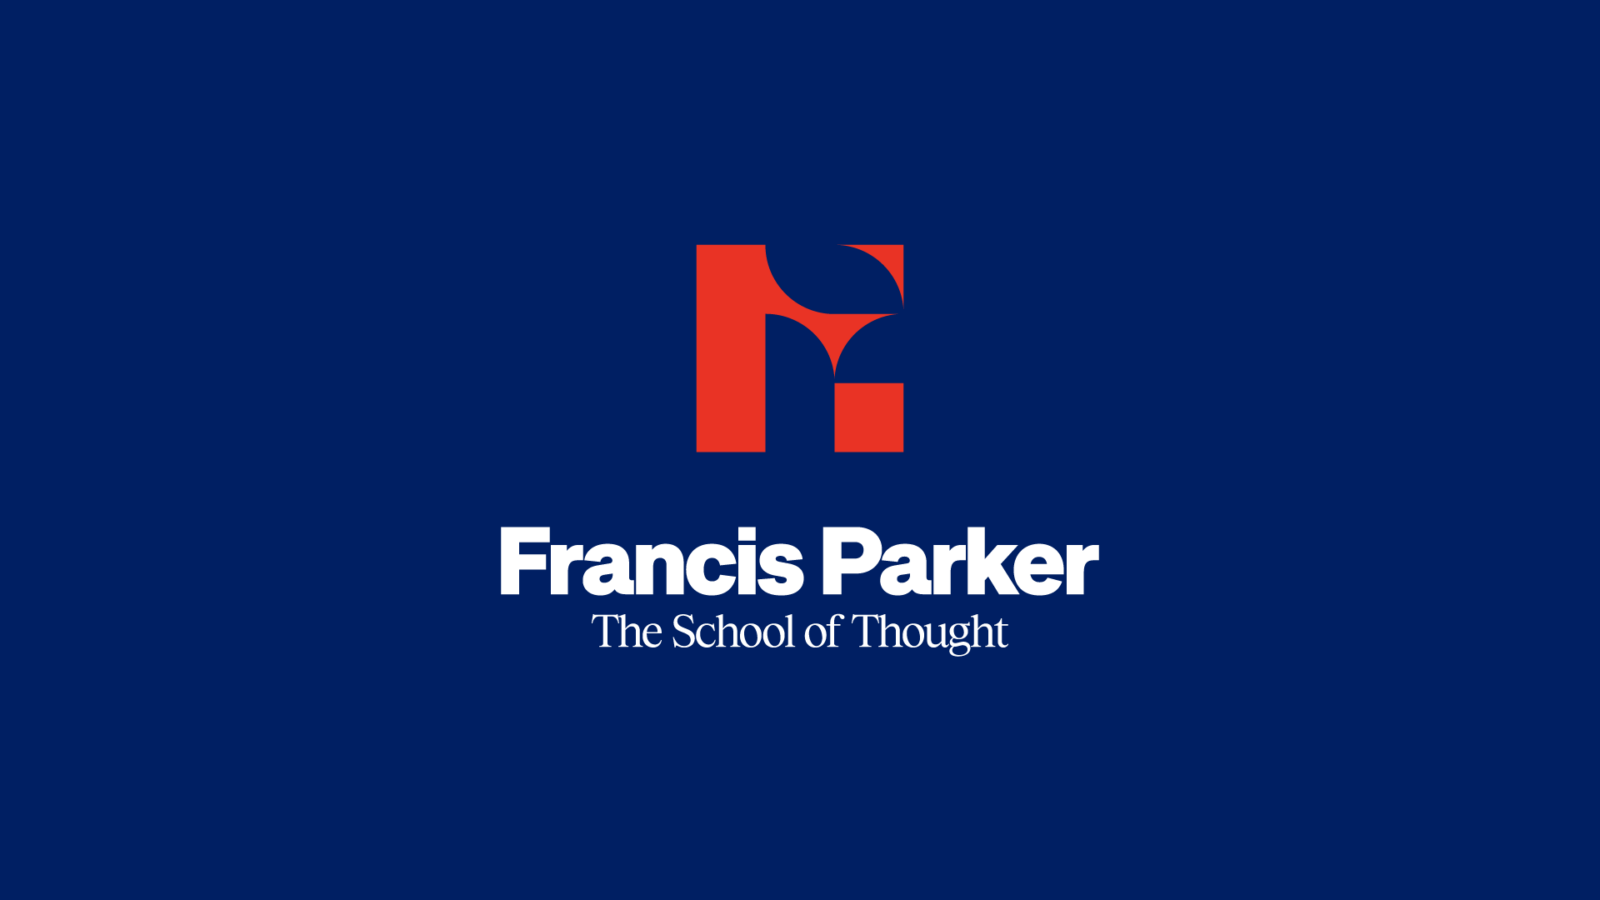 Francis Parker School, Education Branding, FP Logo Design